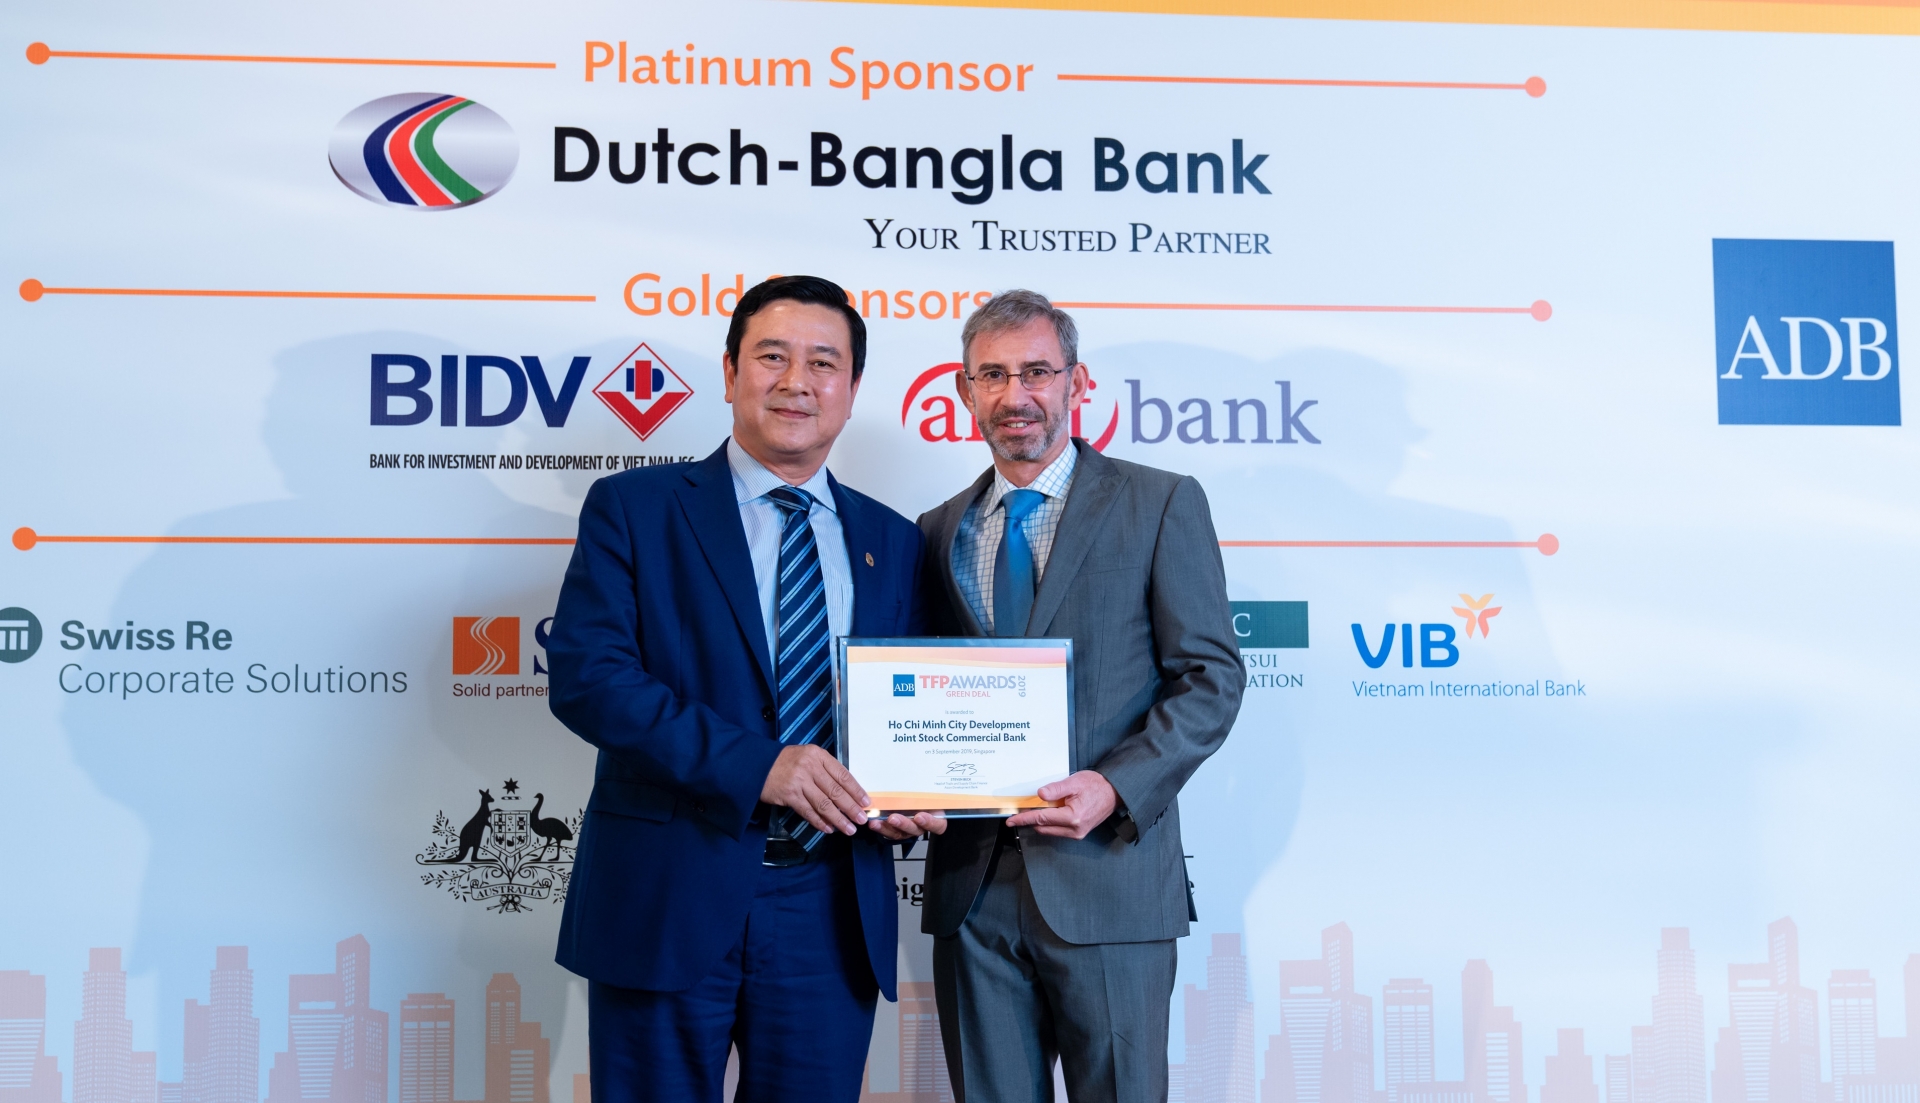 HDBank – First Vietnamese bank to receive Green Deal Award from ADB